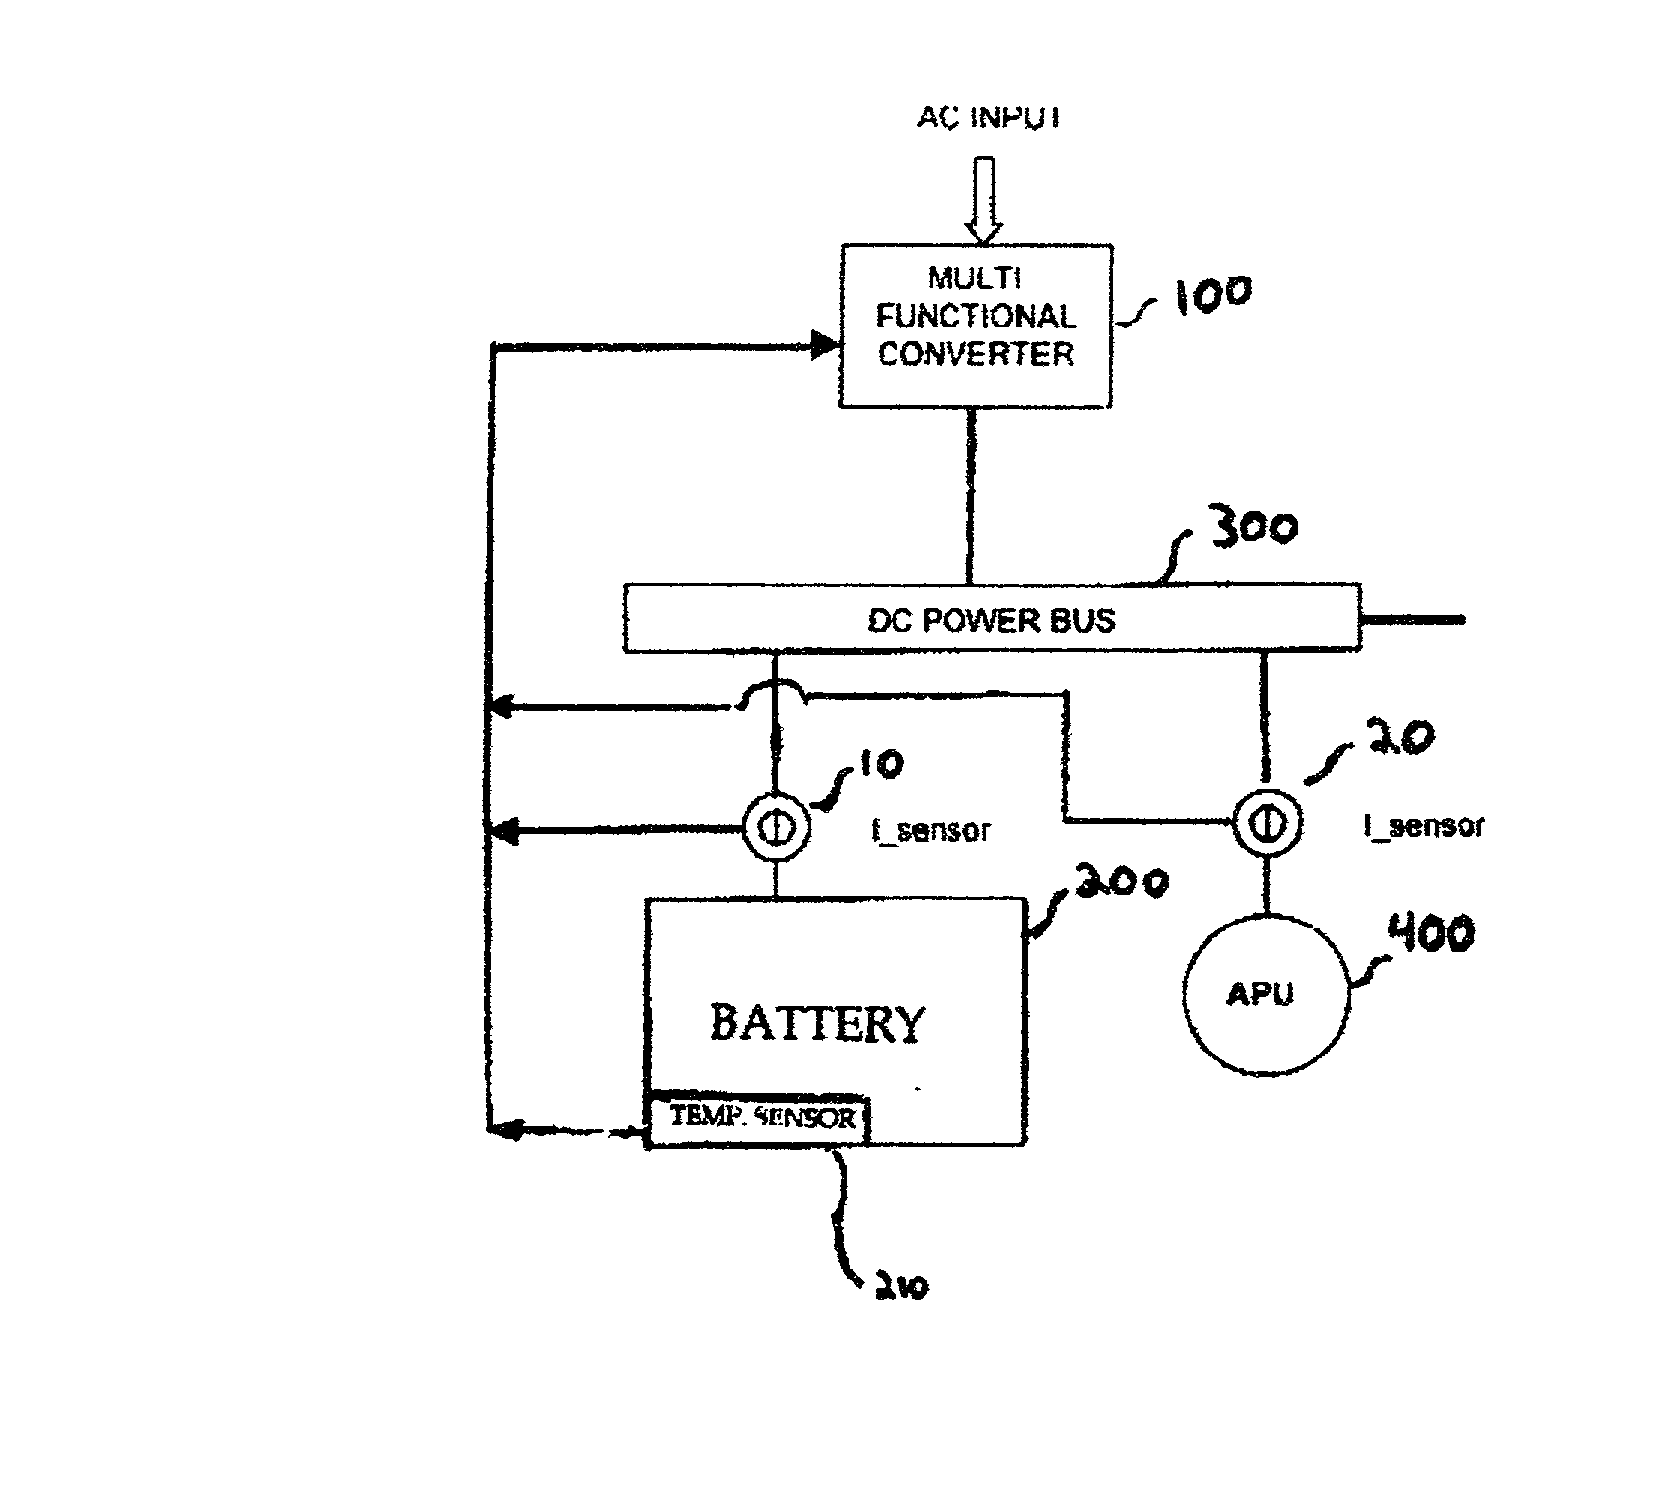 Multi-functional AC/DC converter